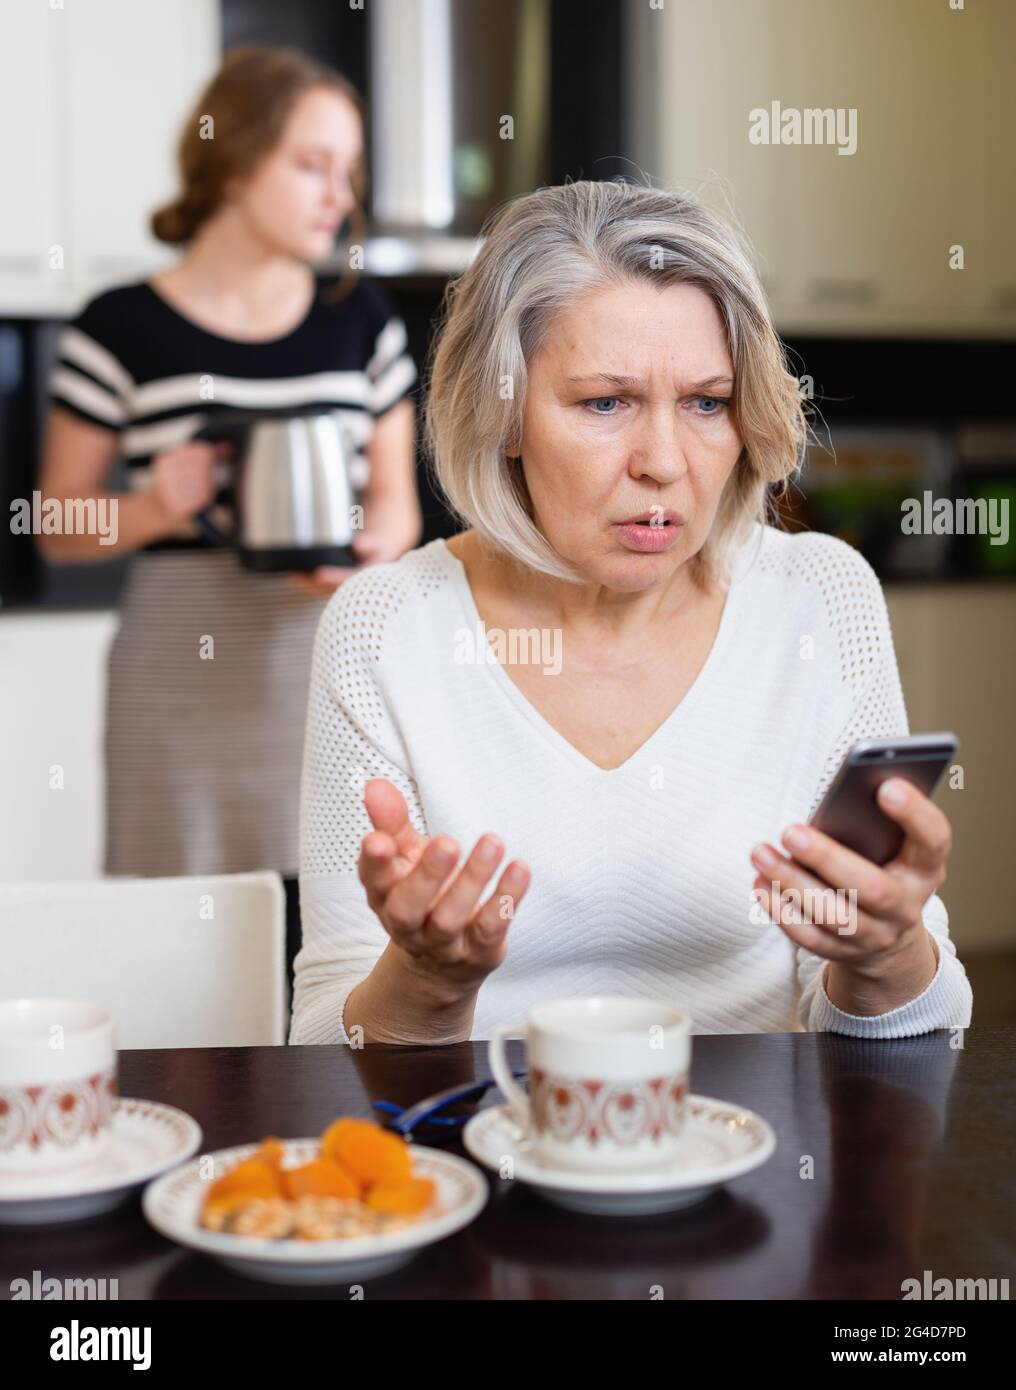 Upset woman using smartphone Stock Photo